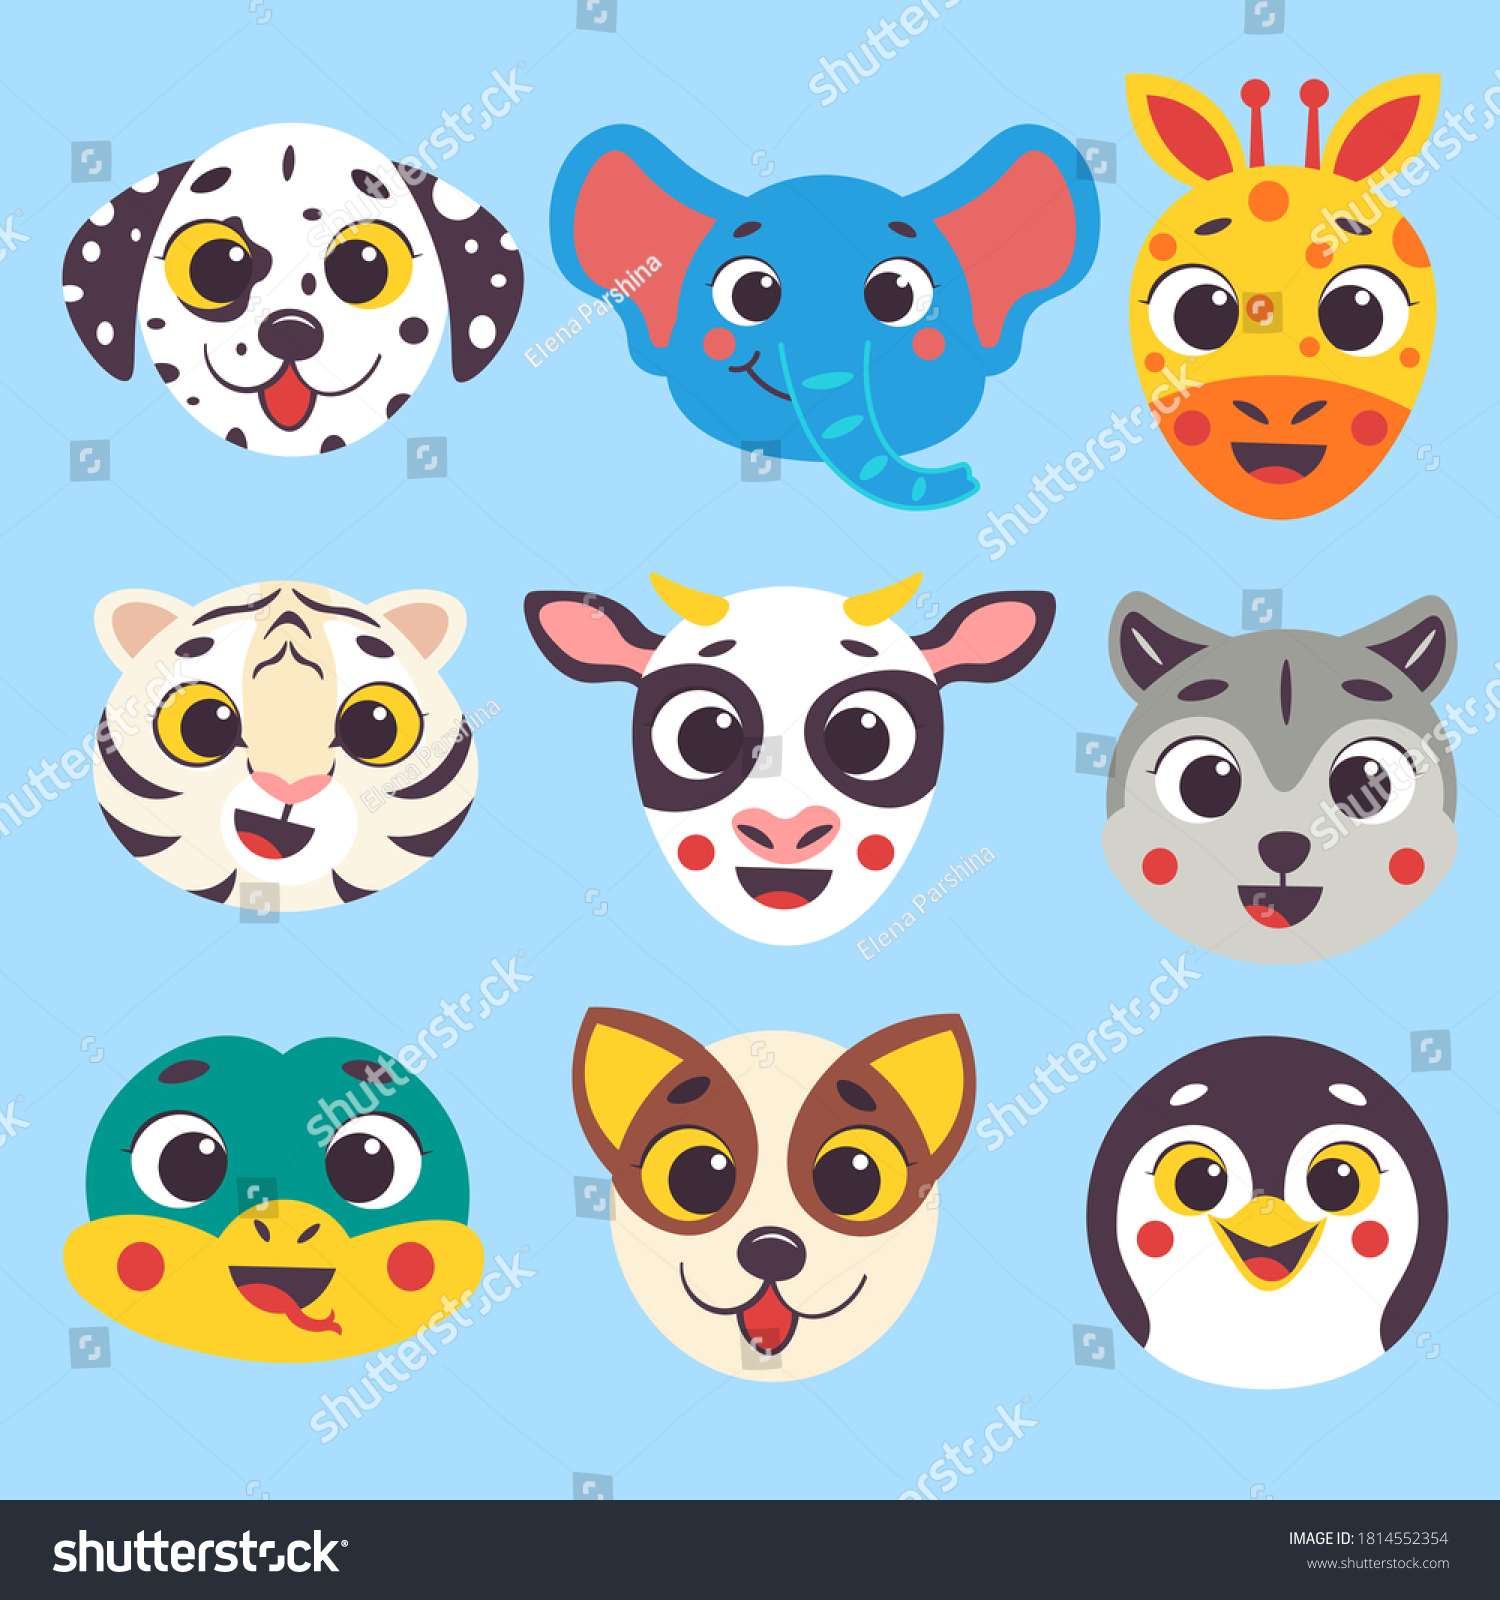 SVG of Cute cartoon animals faces set part 3. Isolated vector illustration. Dalmatian dog, elephant, giraffe, white tiger, cow, wolf, snake, dog, penguin heads nursery decor. svg